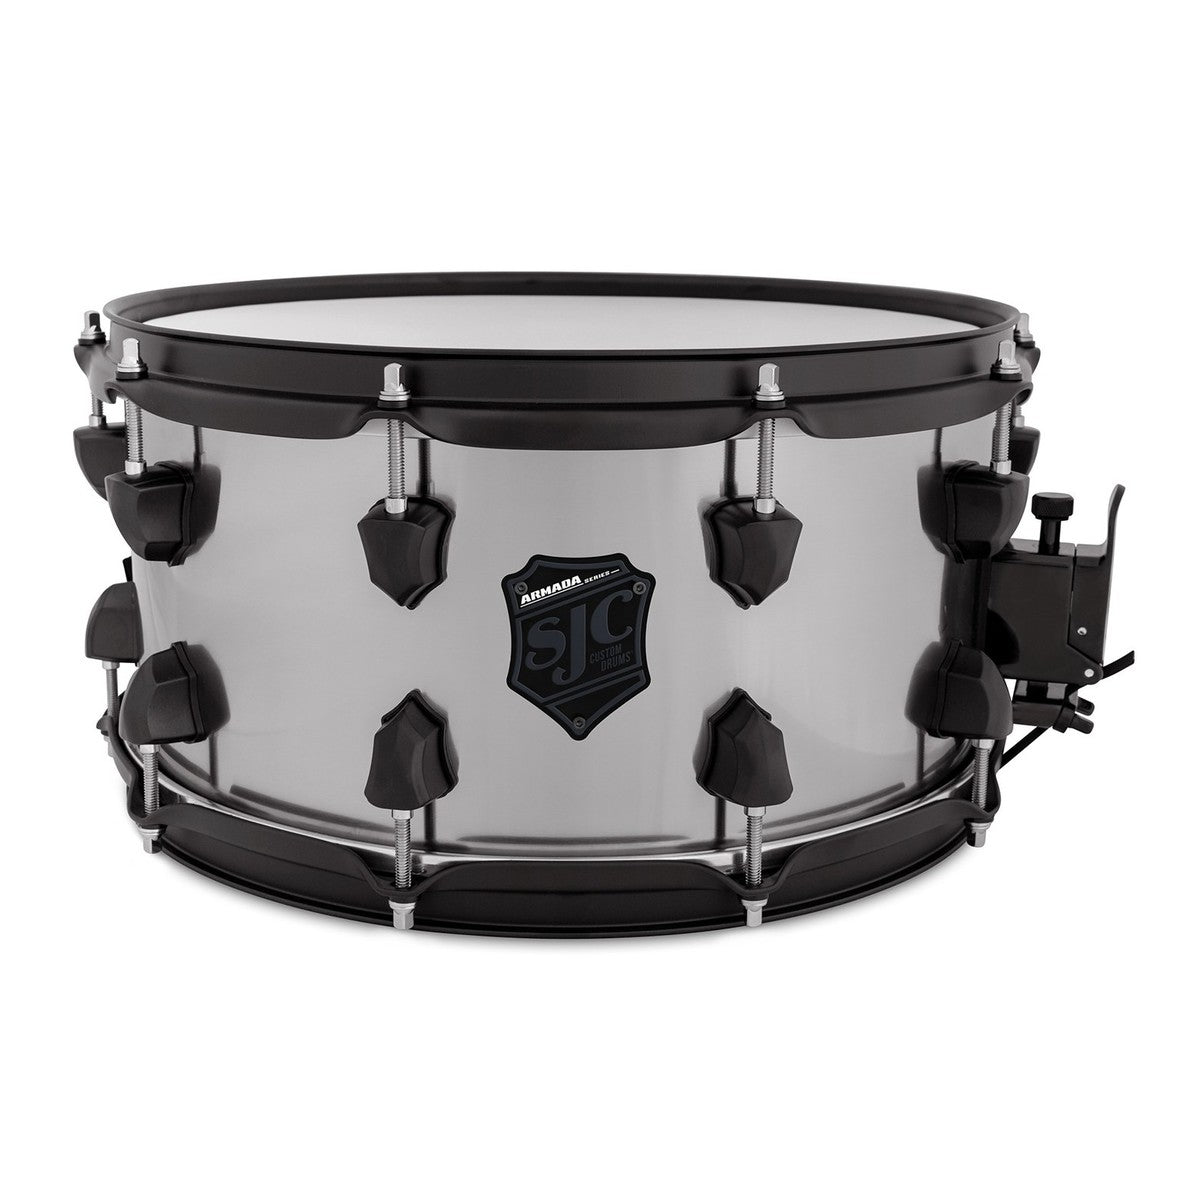 SJC Drums 7"x14" Snare Drum | Flat Black Hardware